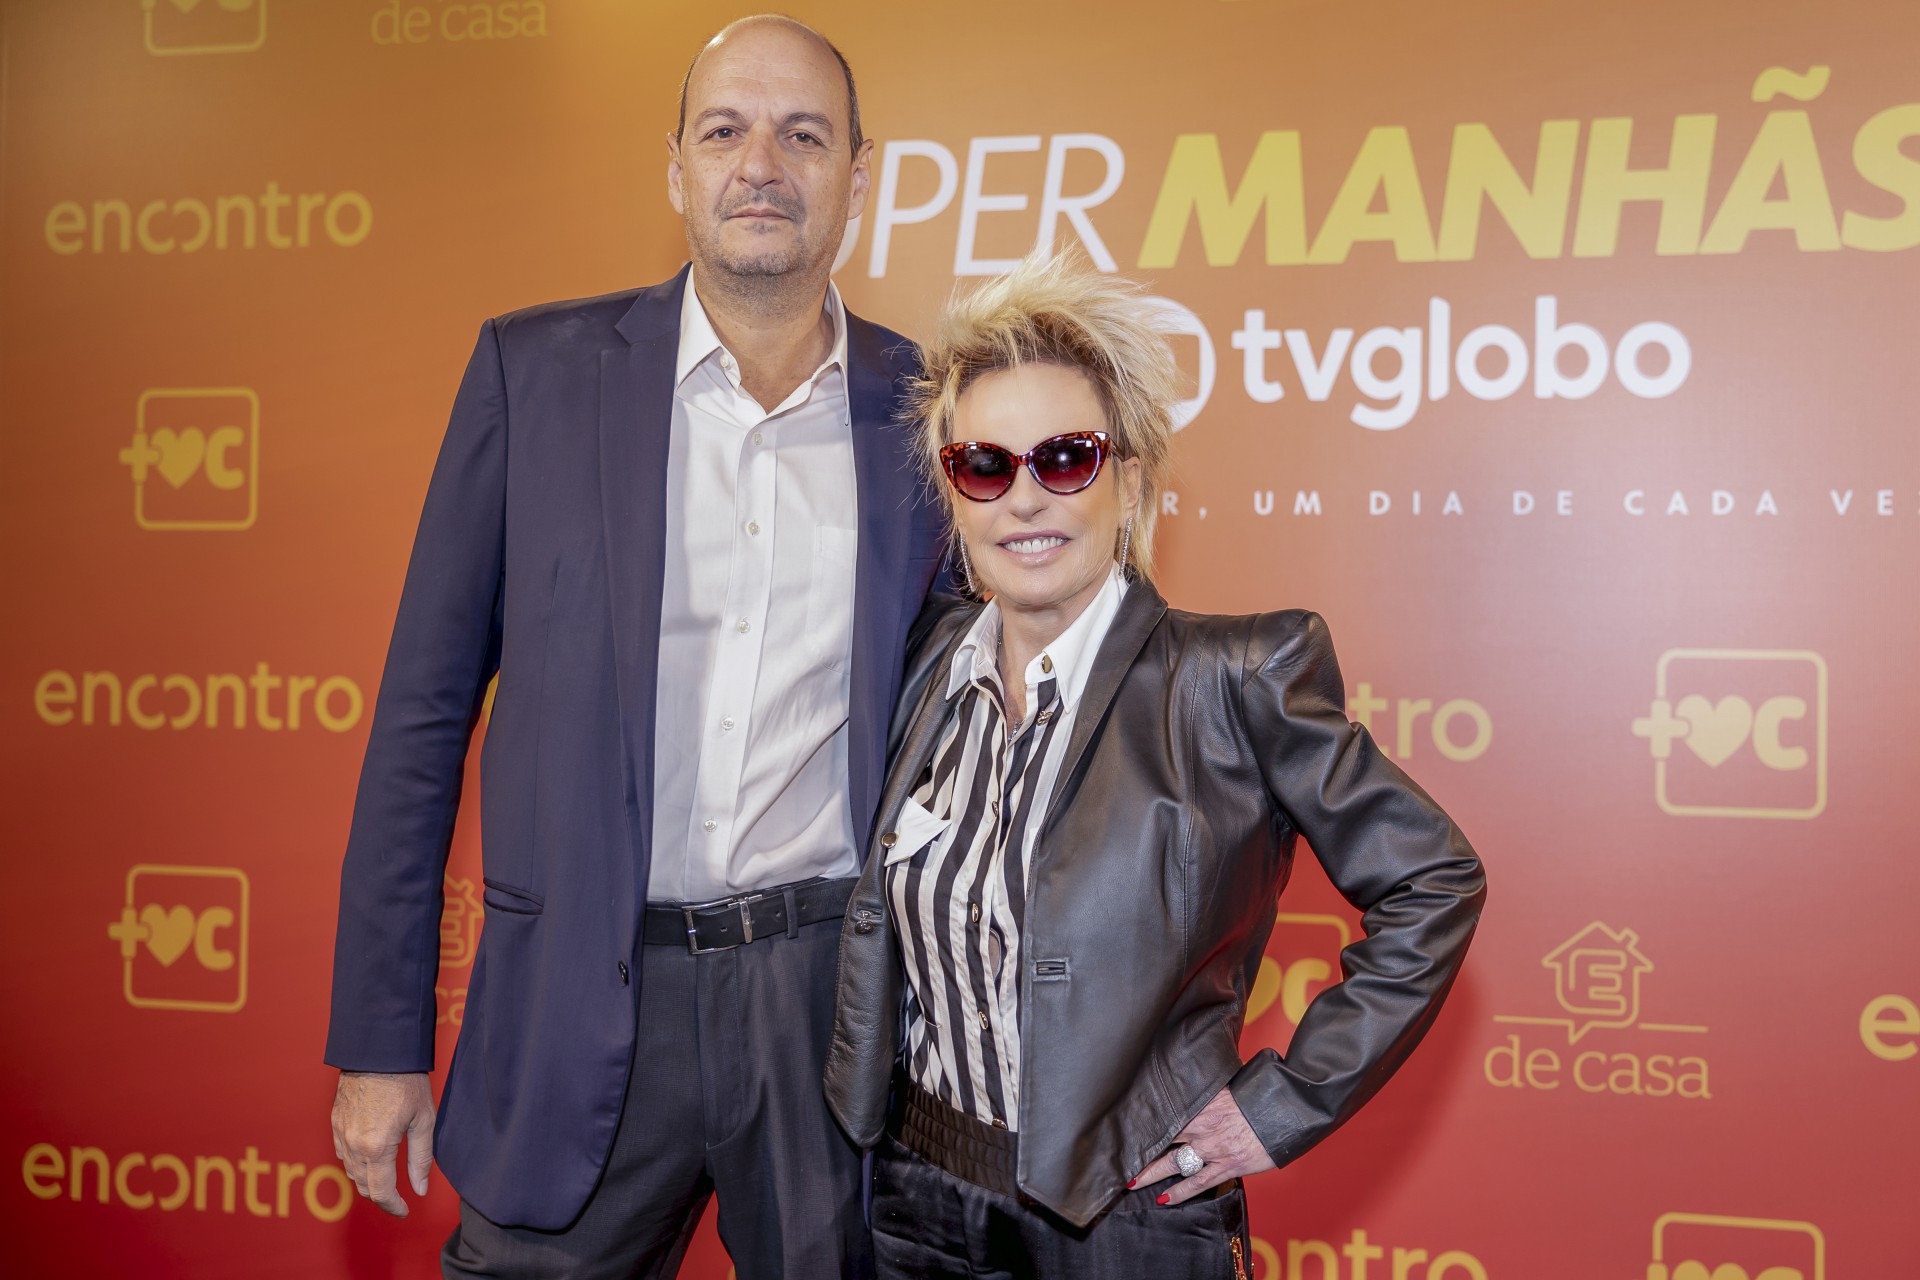 Mariano Boni e Ana Maria Braga na coletiva de imprensa das Super Manhãs da TV Globo - Kelly Fuzaro / TV Globo